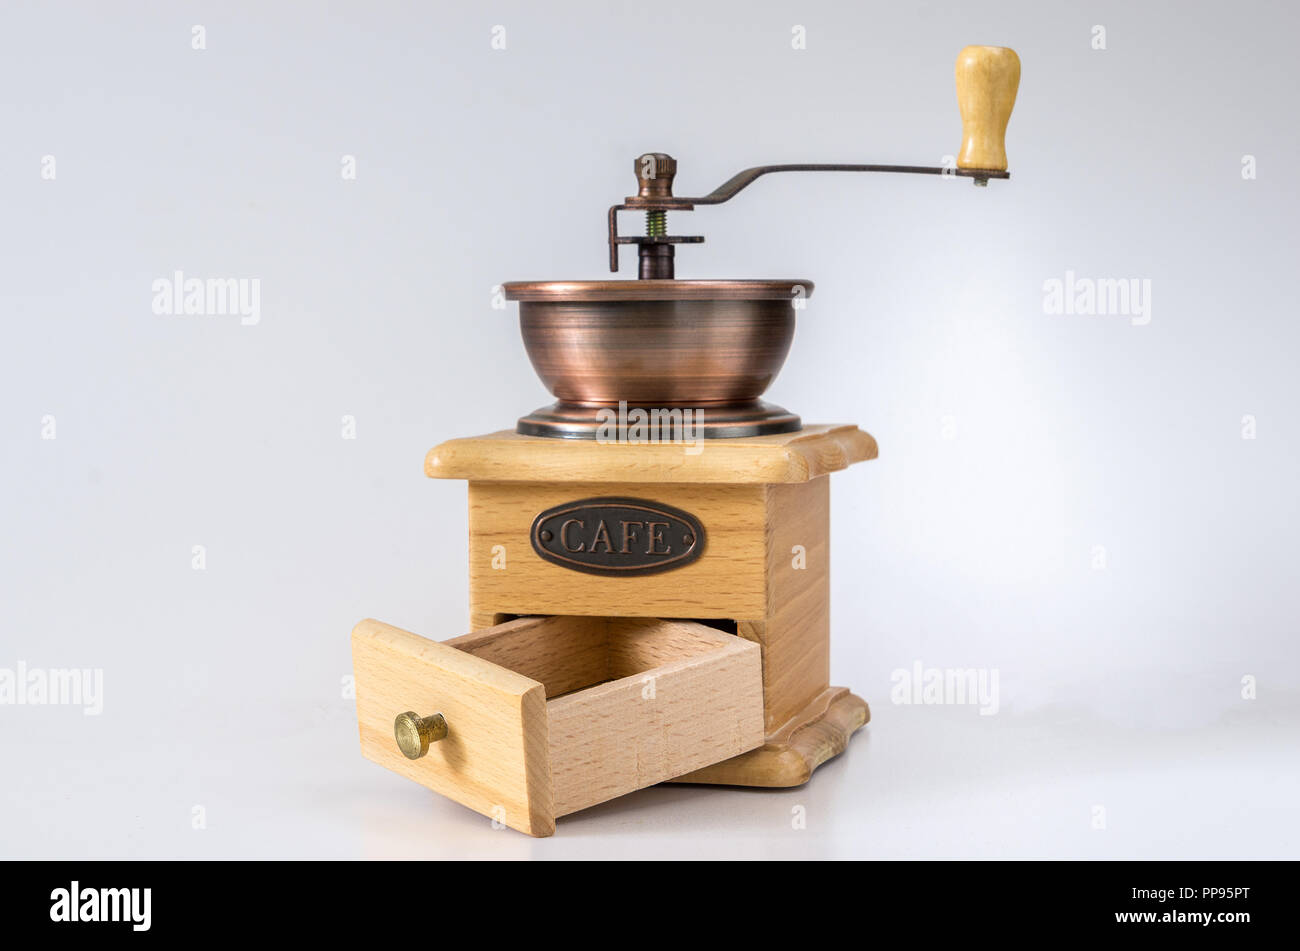 https://c8.alamy.com/comp/PP95PT/decorative-hand-wooden-grinder-on-the-roasted-coffee-PP95PT.jpg